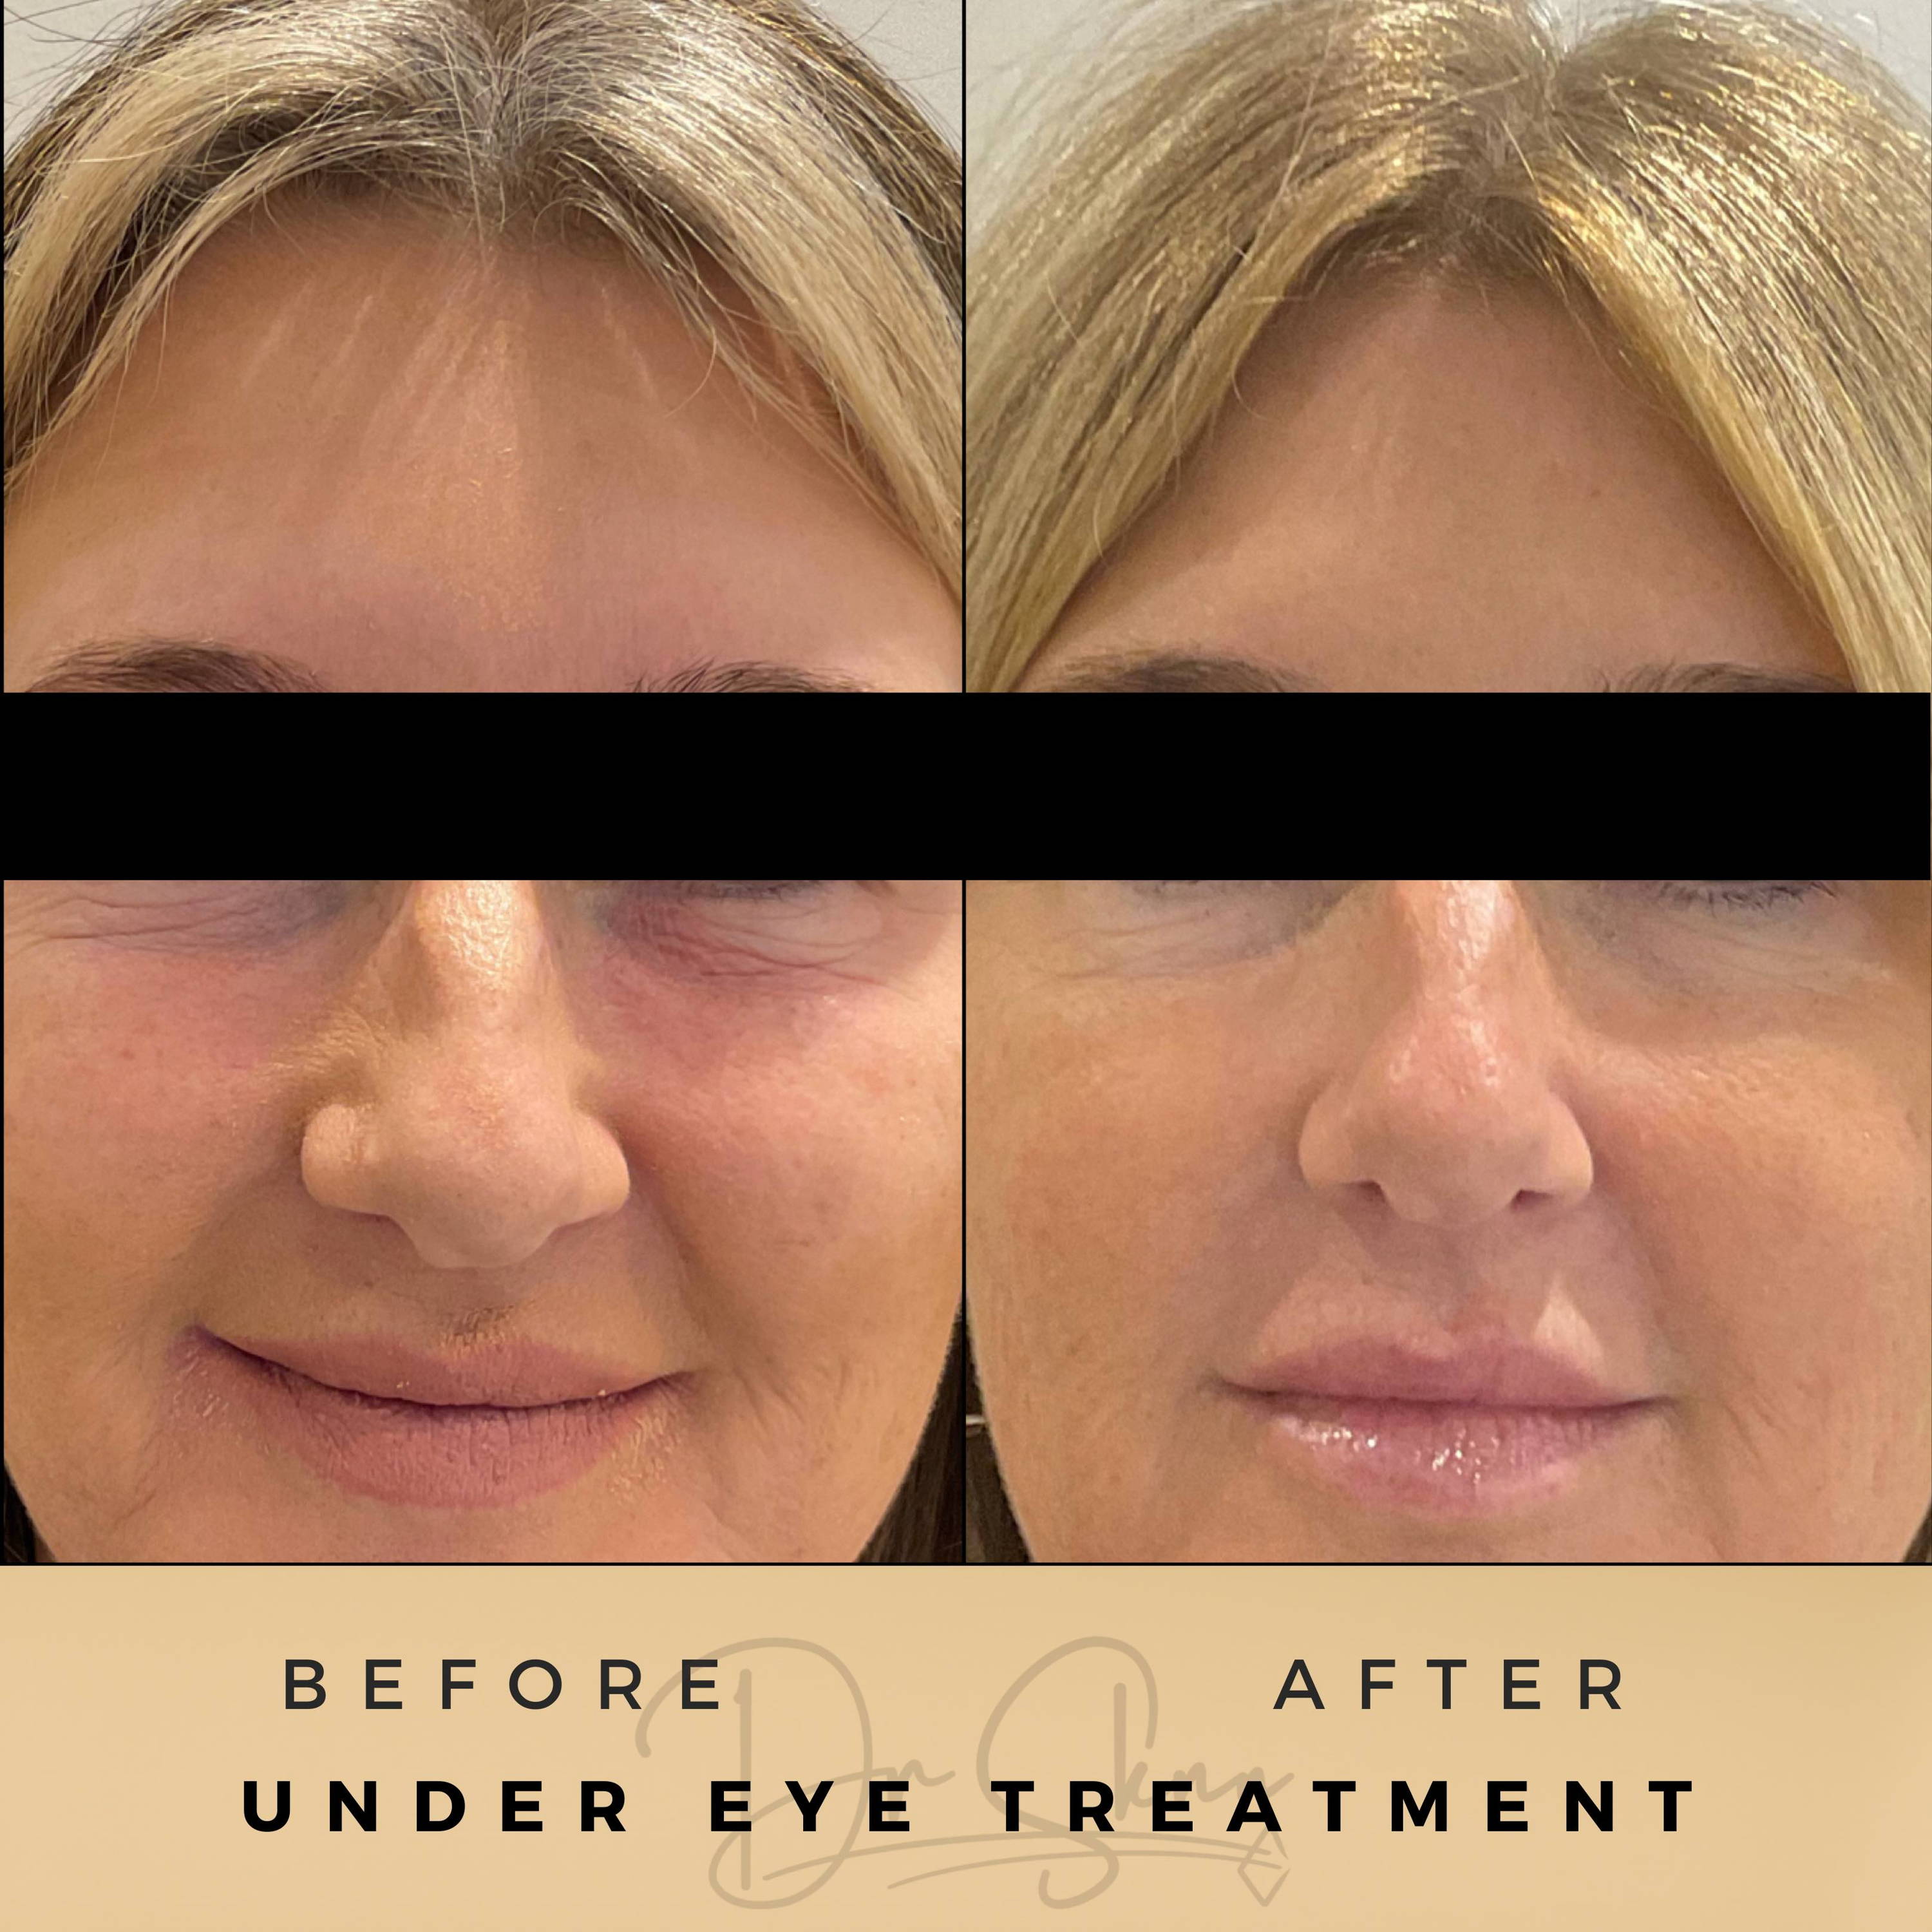 Under Eye Wrinkle Treatment Wilmslow Before & After Dr Sknn